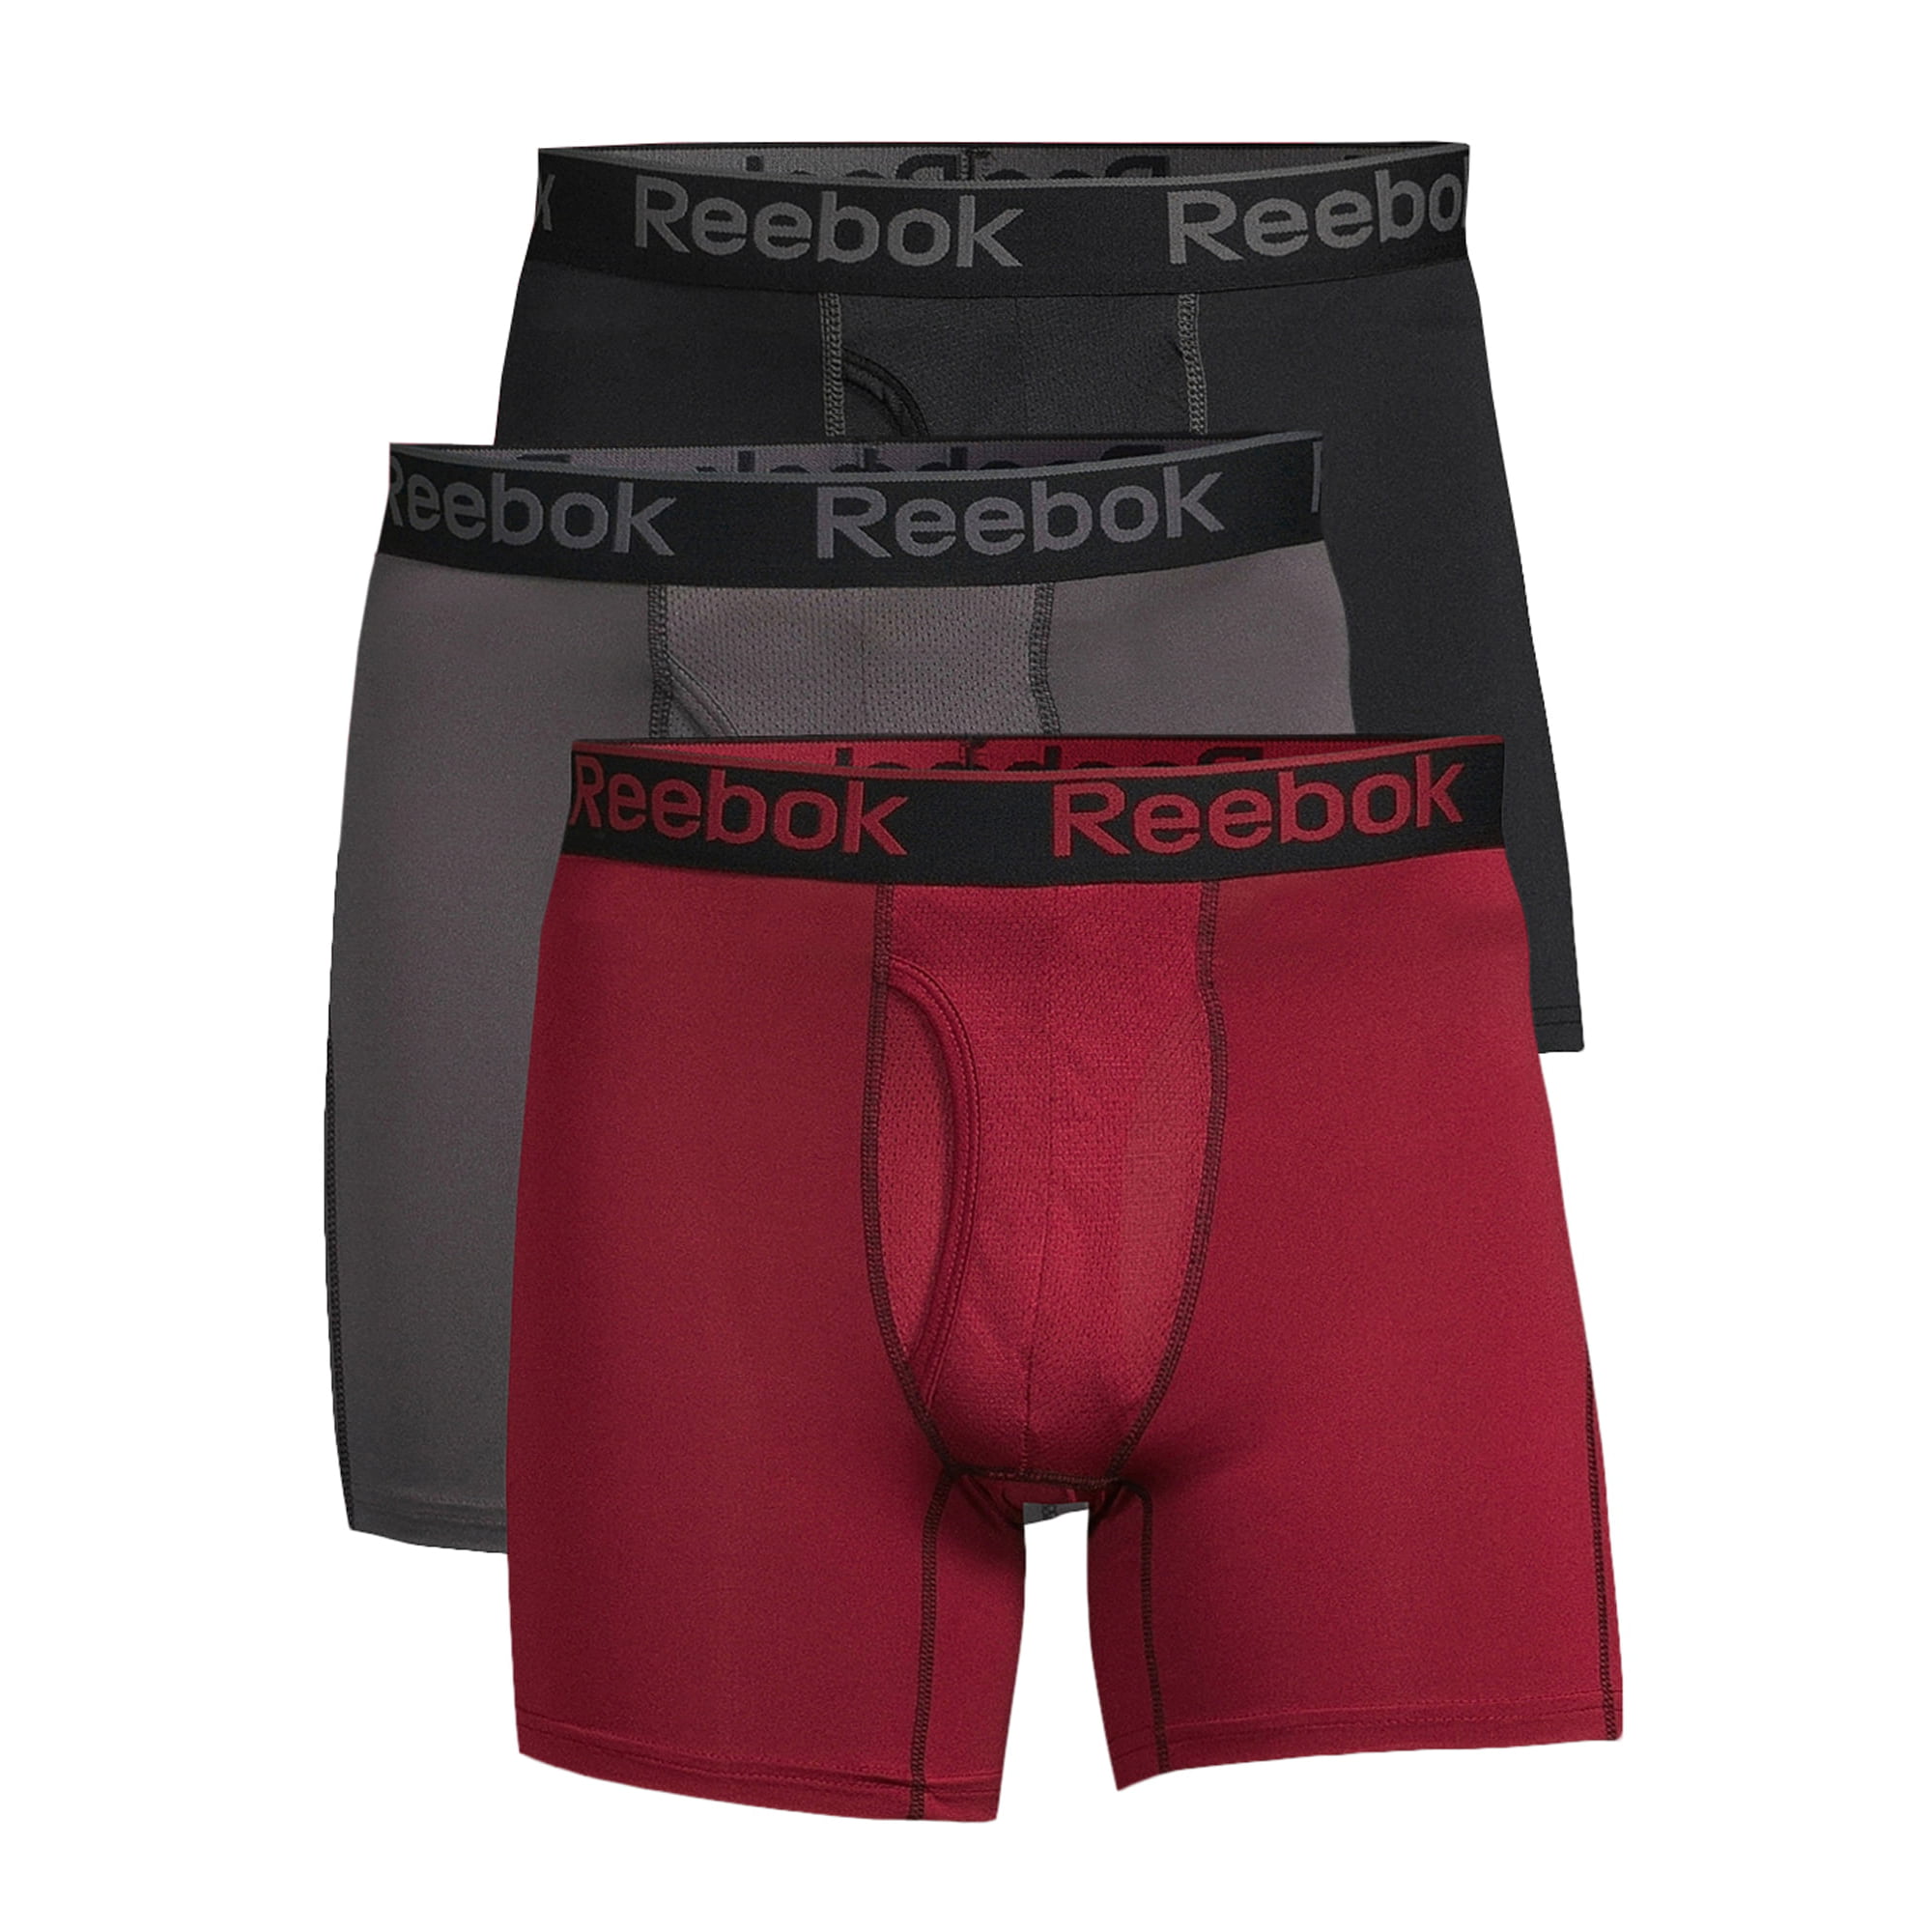 Reebok Men's Pro Series Performance Boxer Brief, 3 Pack - image 1 of 13